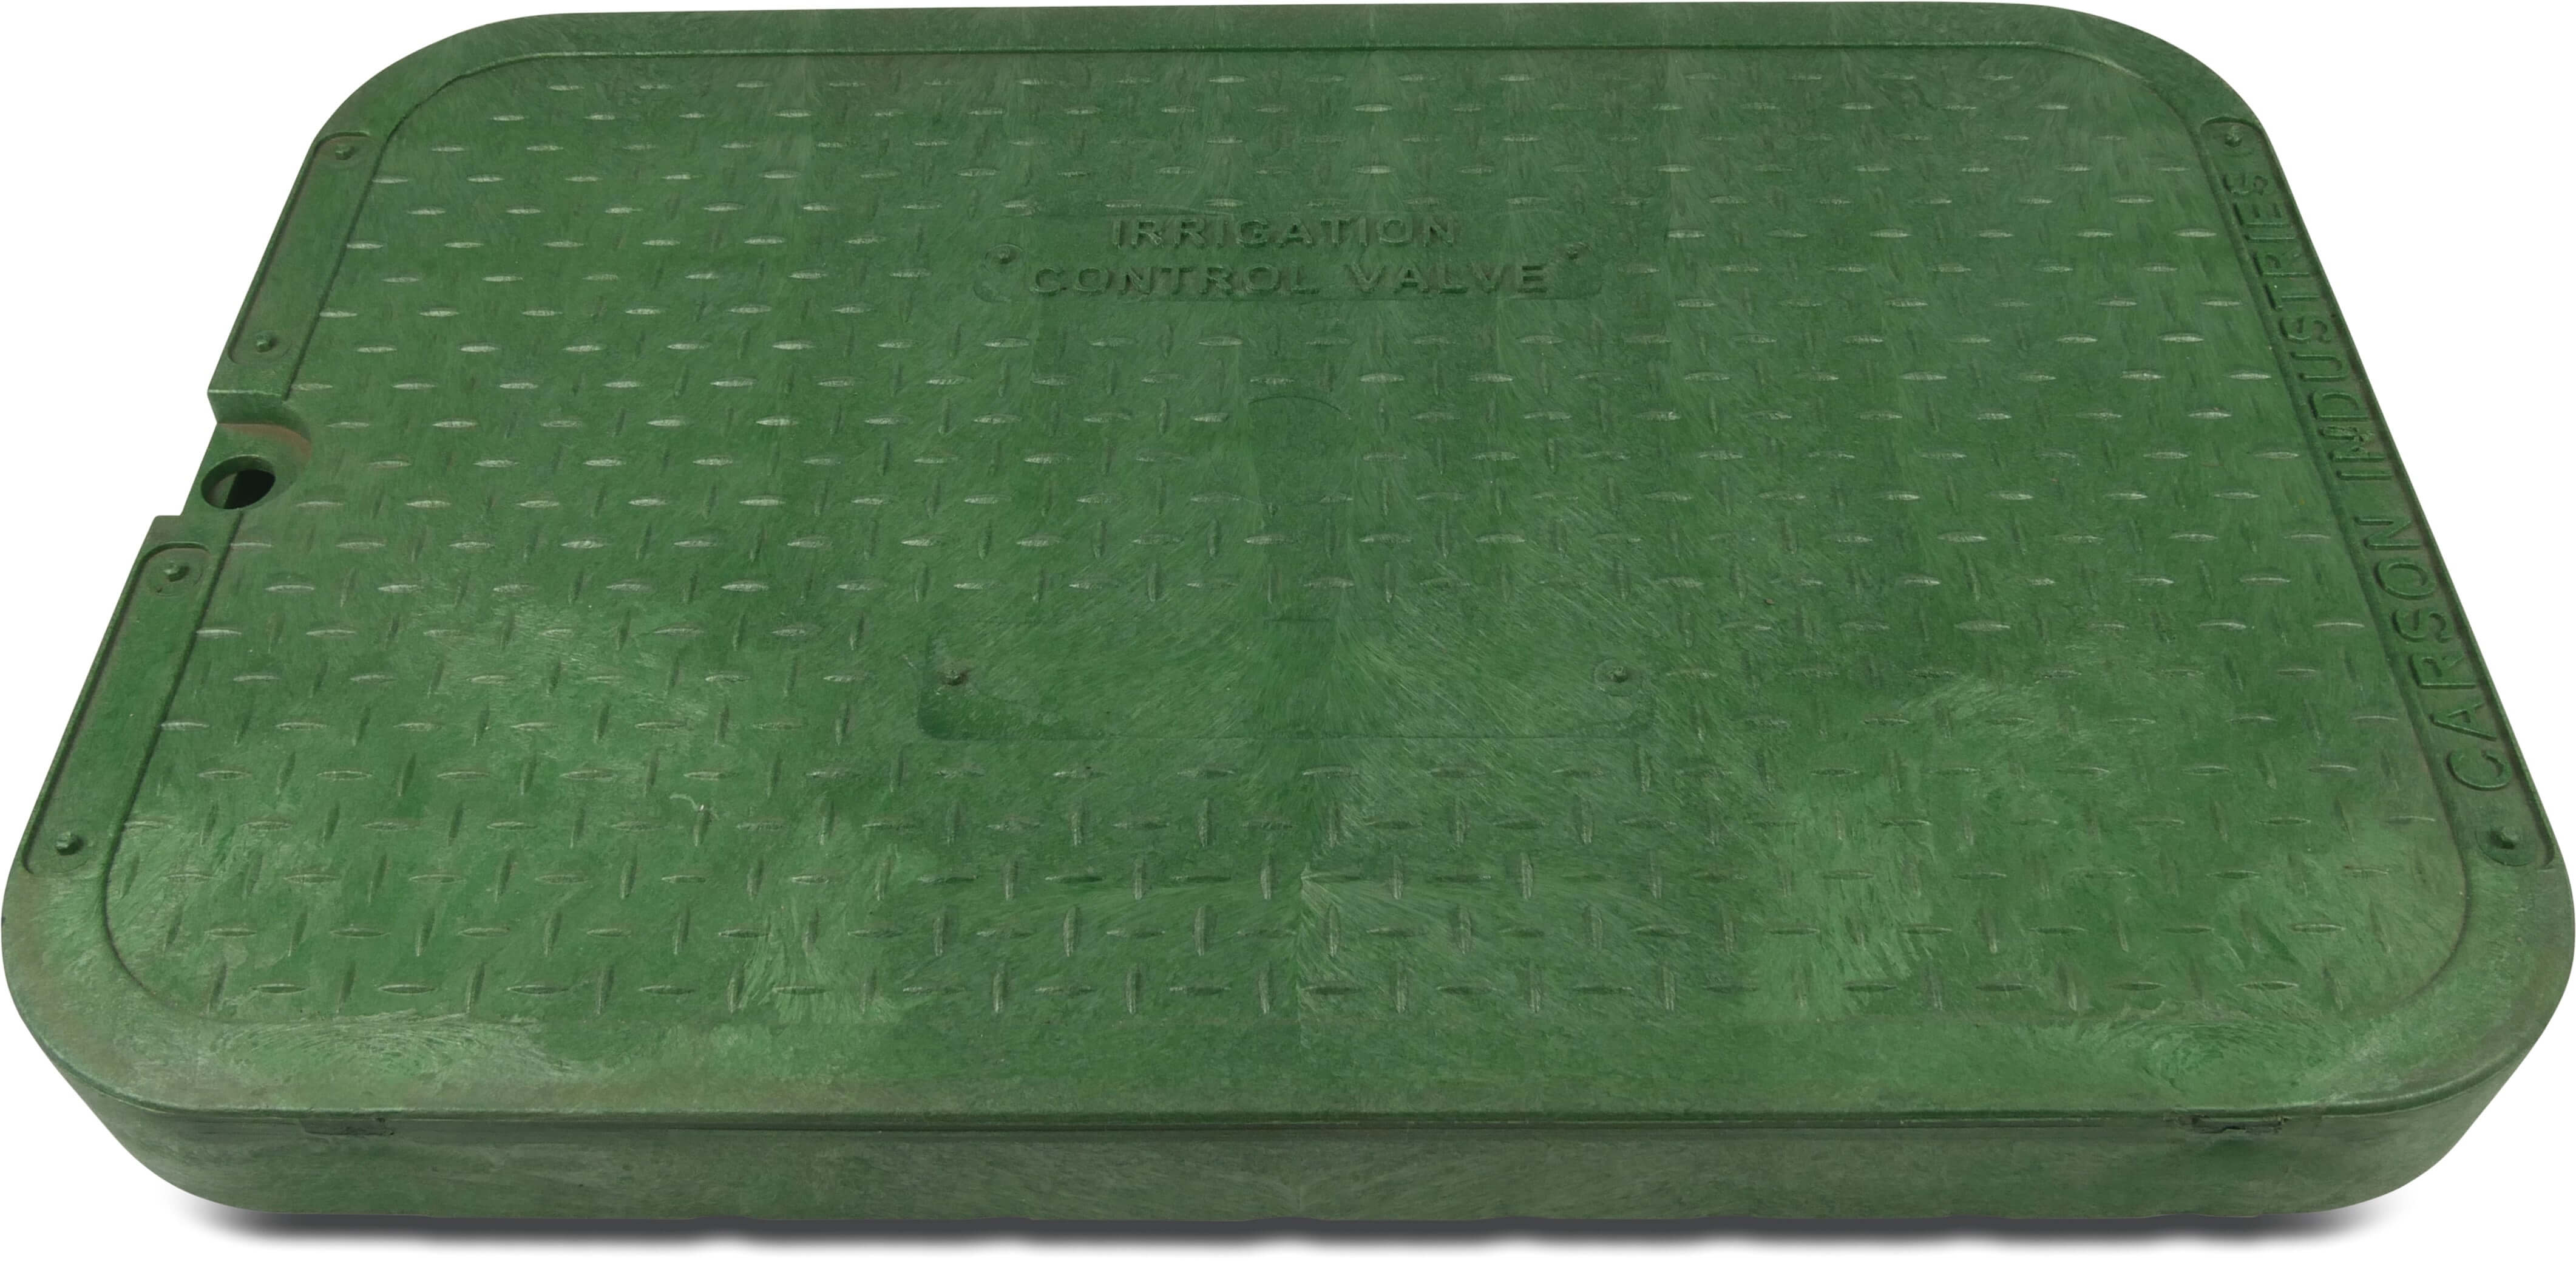 Valve box cover HDPE green type VB-1220